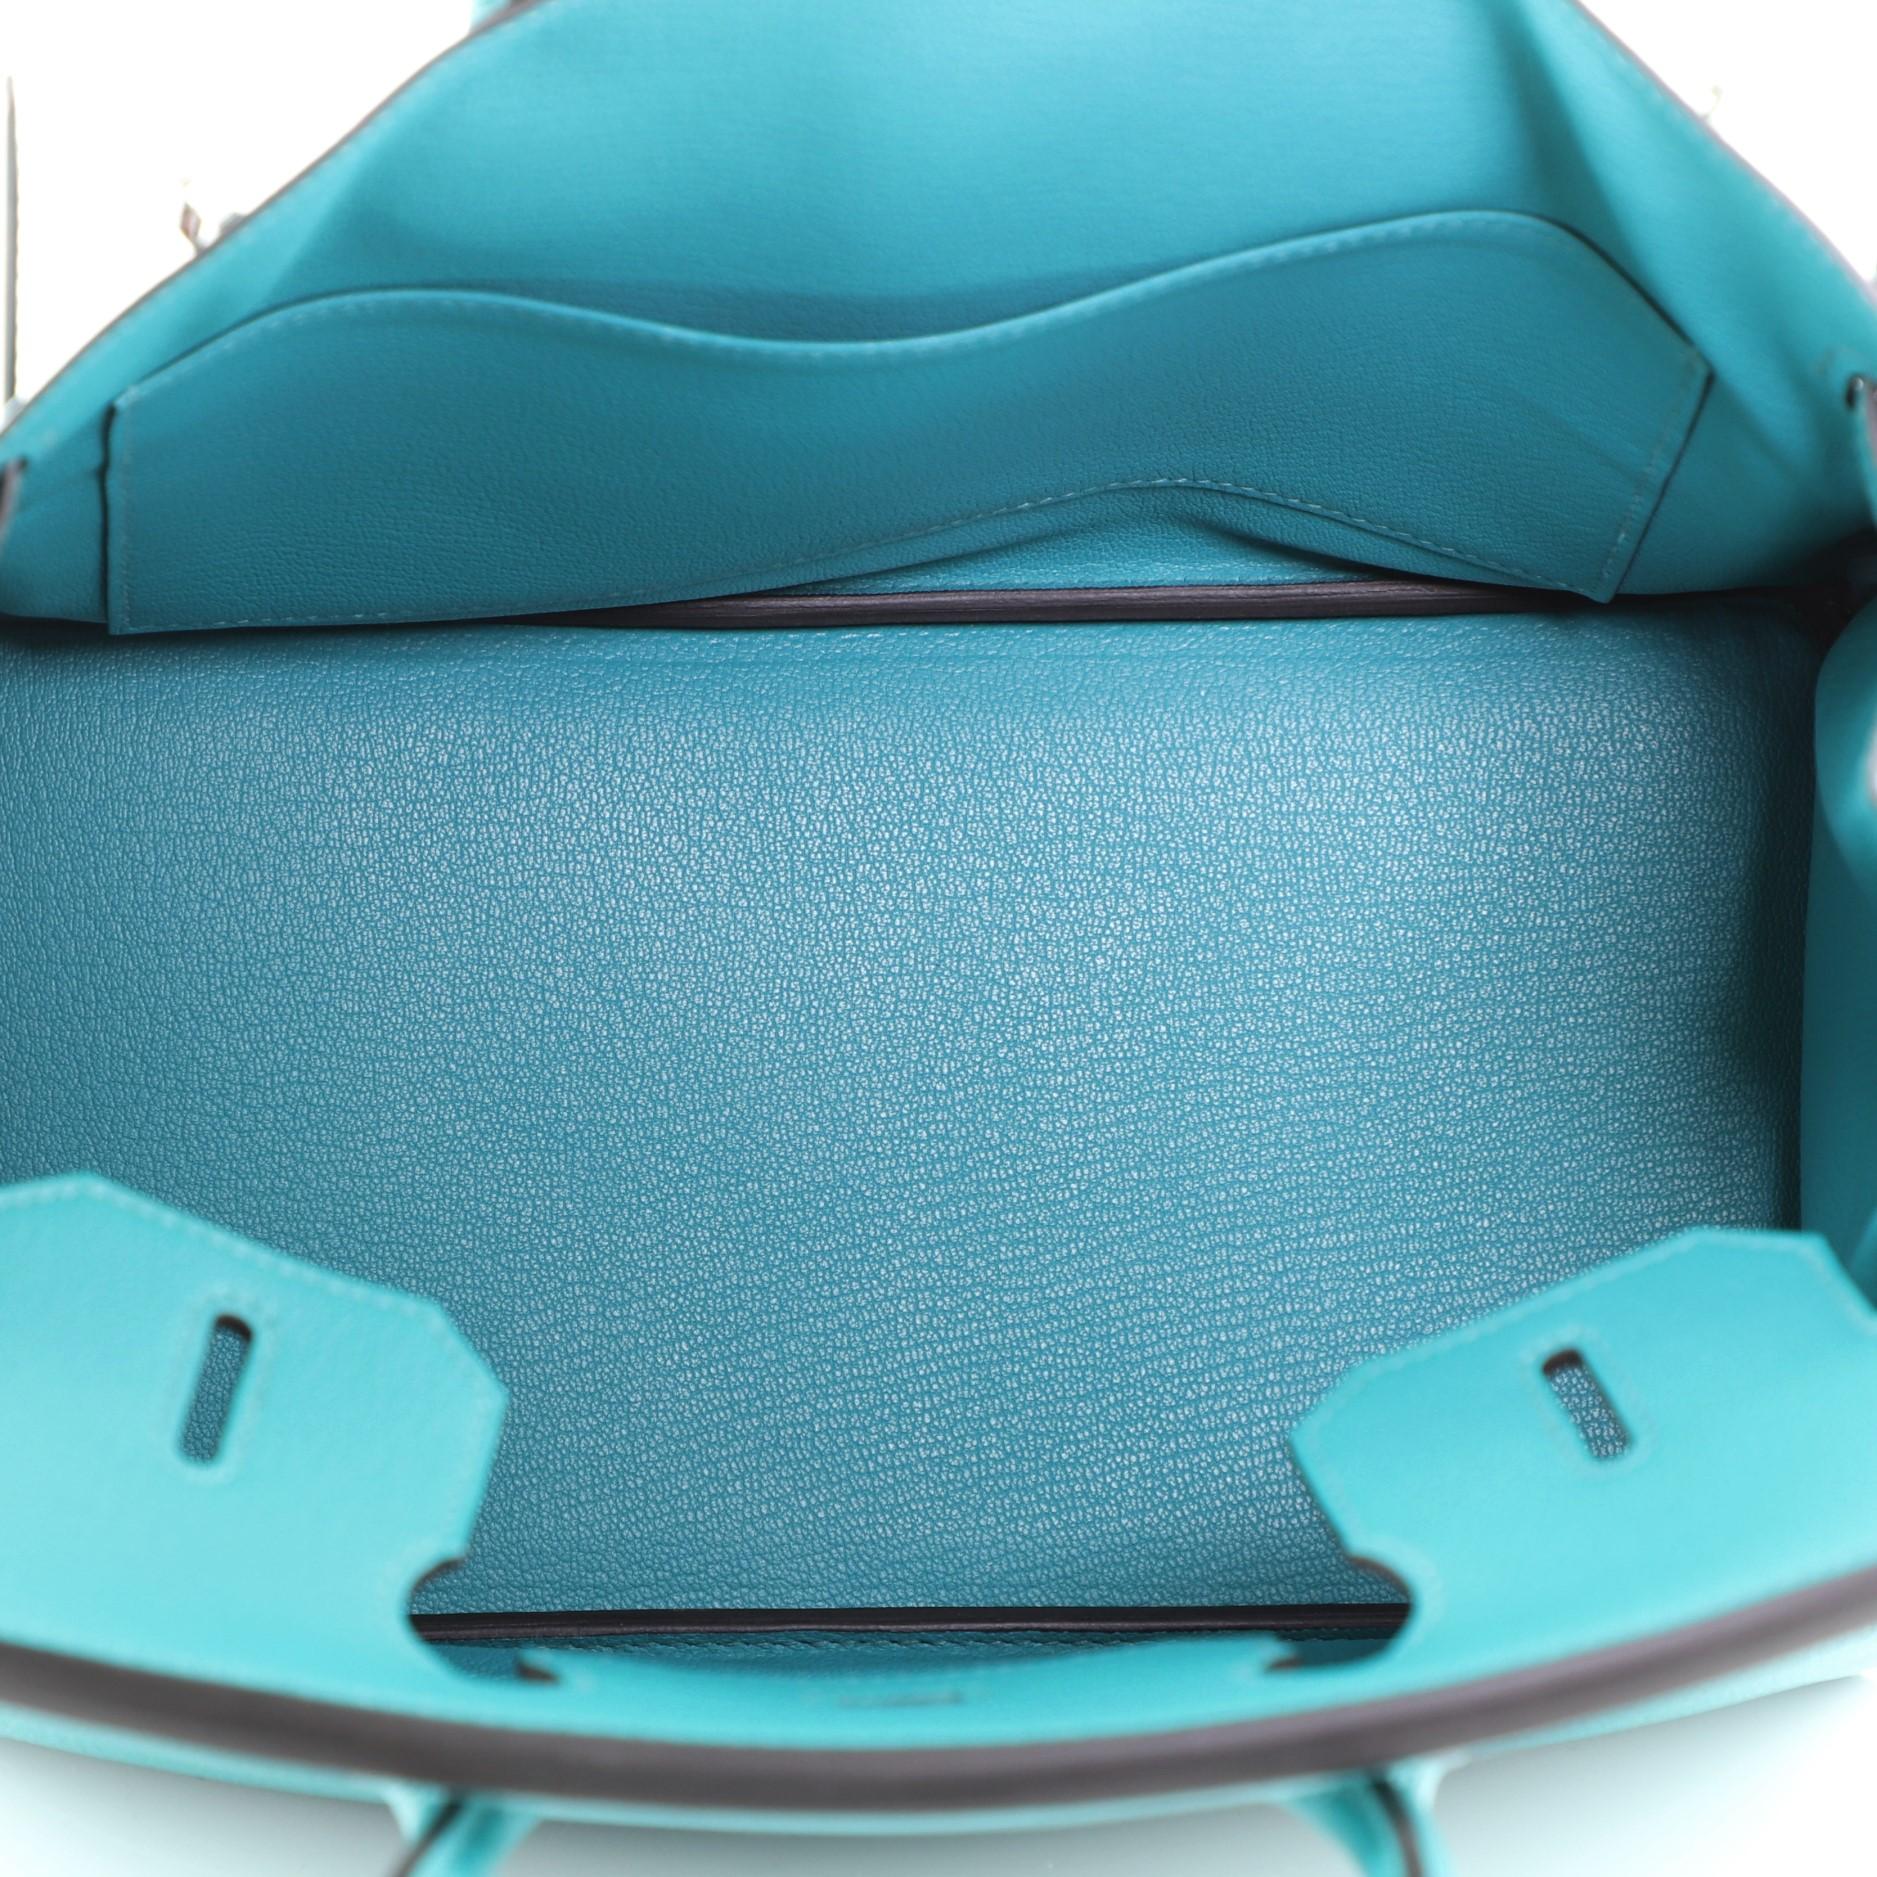 Blue Hermes Birkin Handbag Bleu Paon Chevre Mysore With Palladium Hardware 30 